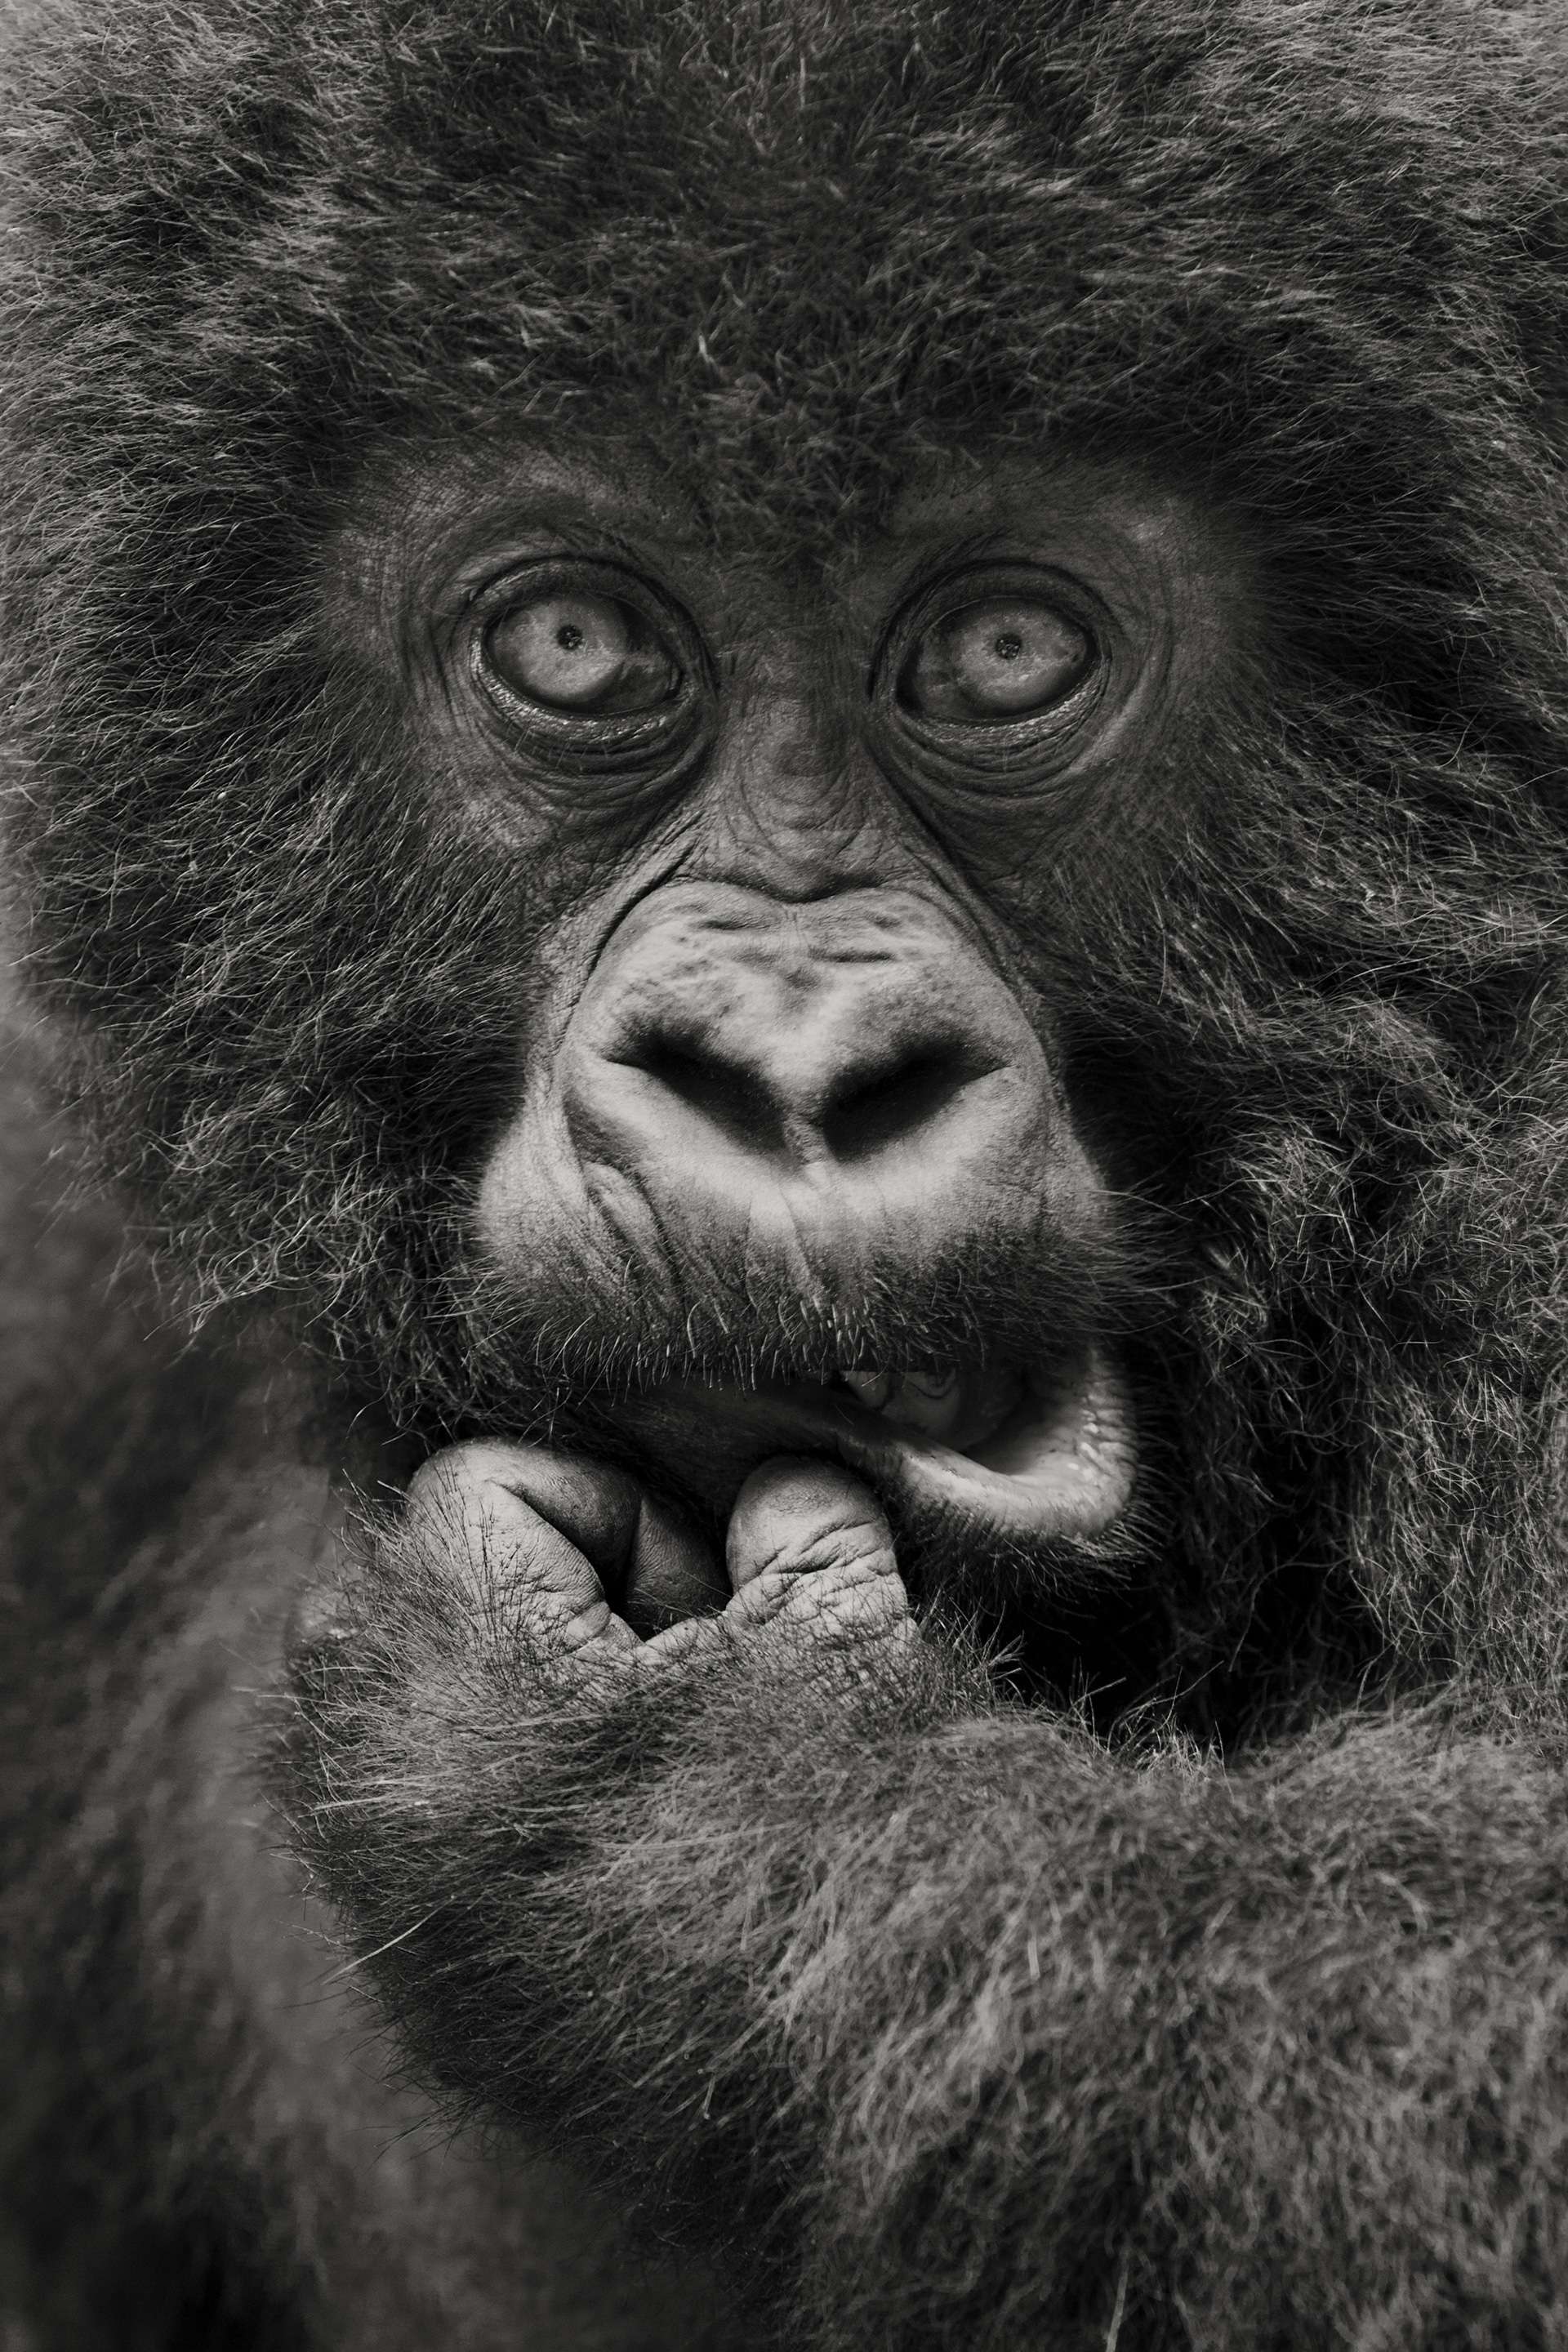 Gilles Martin's photograph of a gorilla from Rwanda